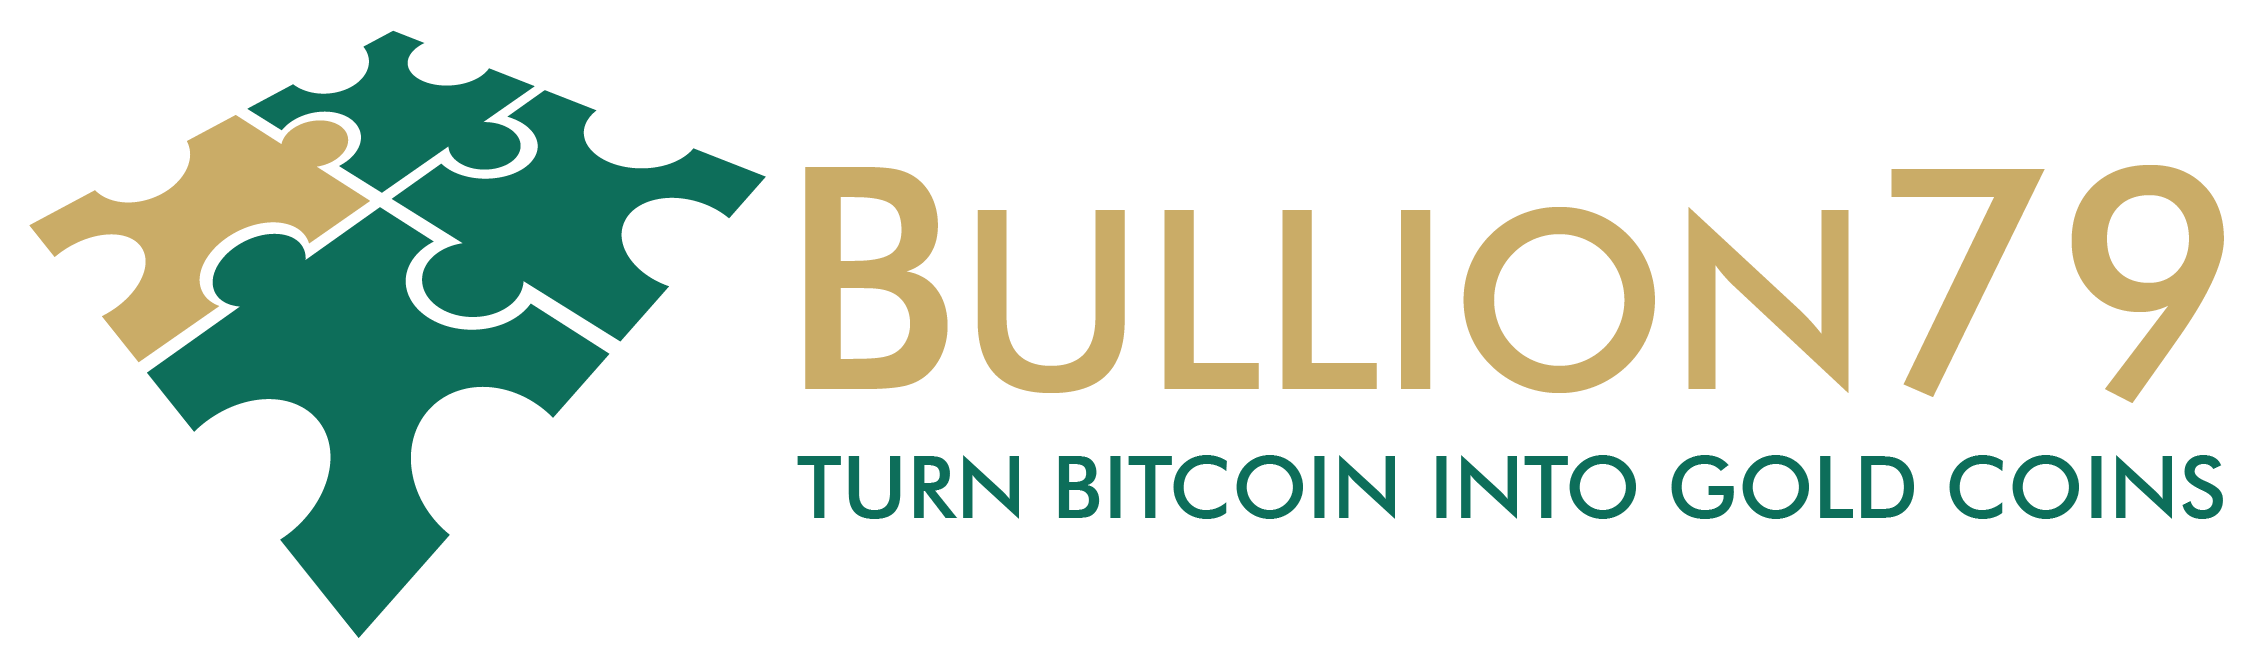 bitcoin and bullion longview tx